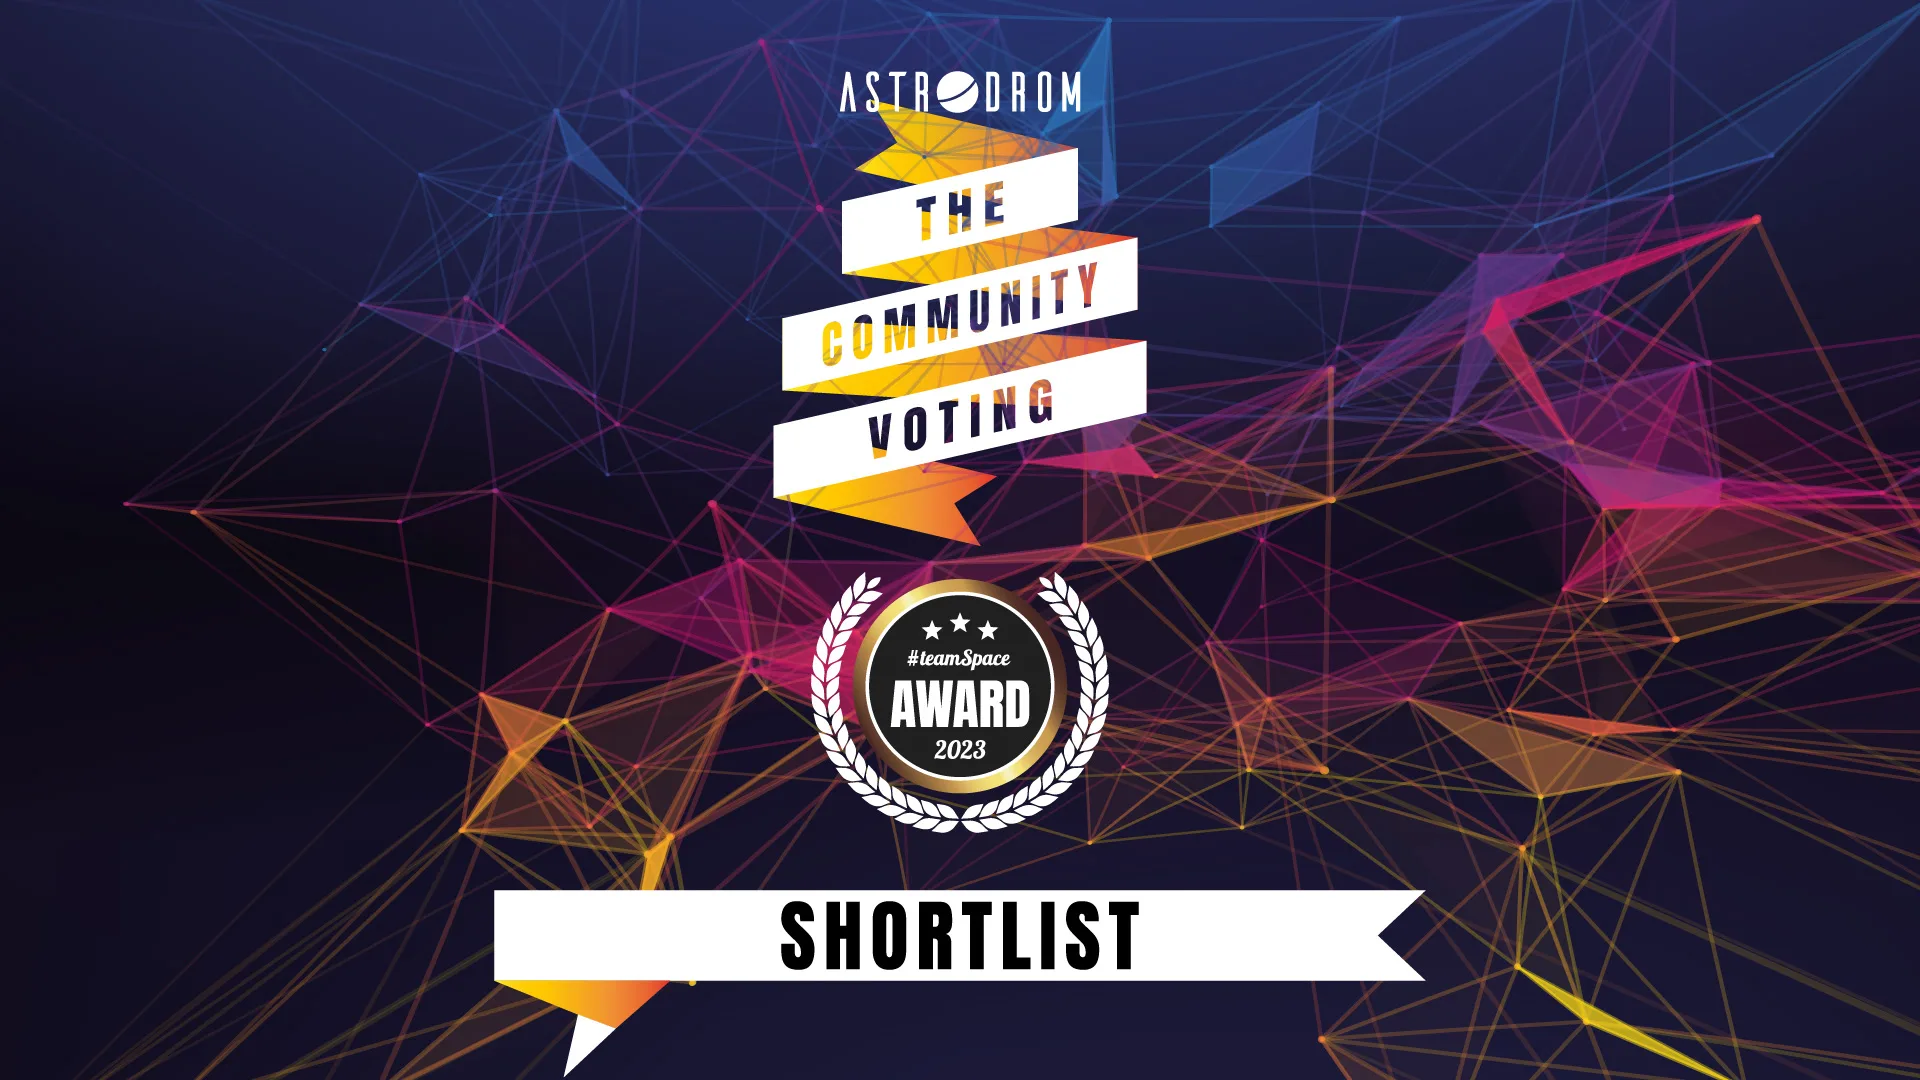 Astrodrom #teamSpace-Awards Shortlist